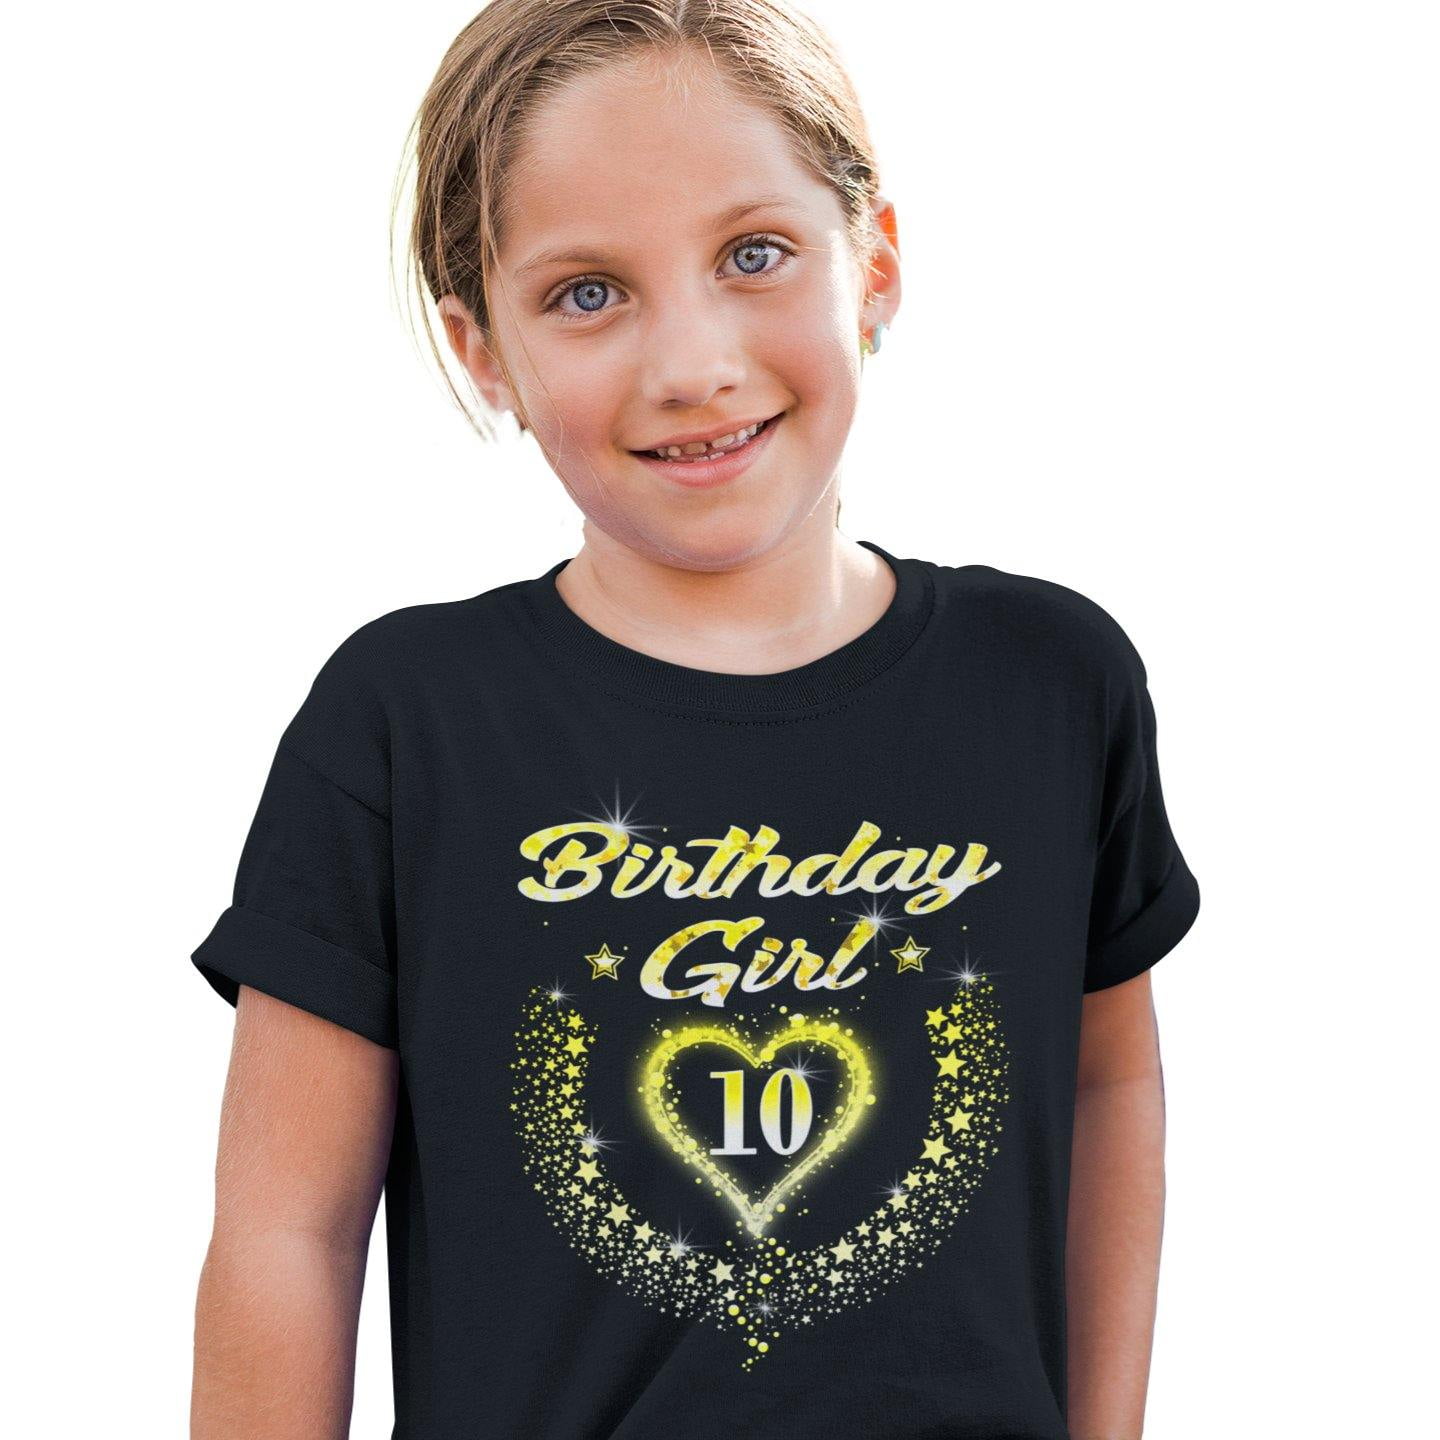 10th Birthday Girl Shirt - 10th Birthday Shirt for Girls 10 Birthday Shirt 10th Birthday Outfit for Girls - Walmart.com